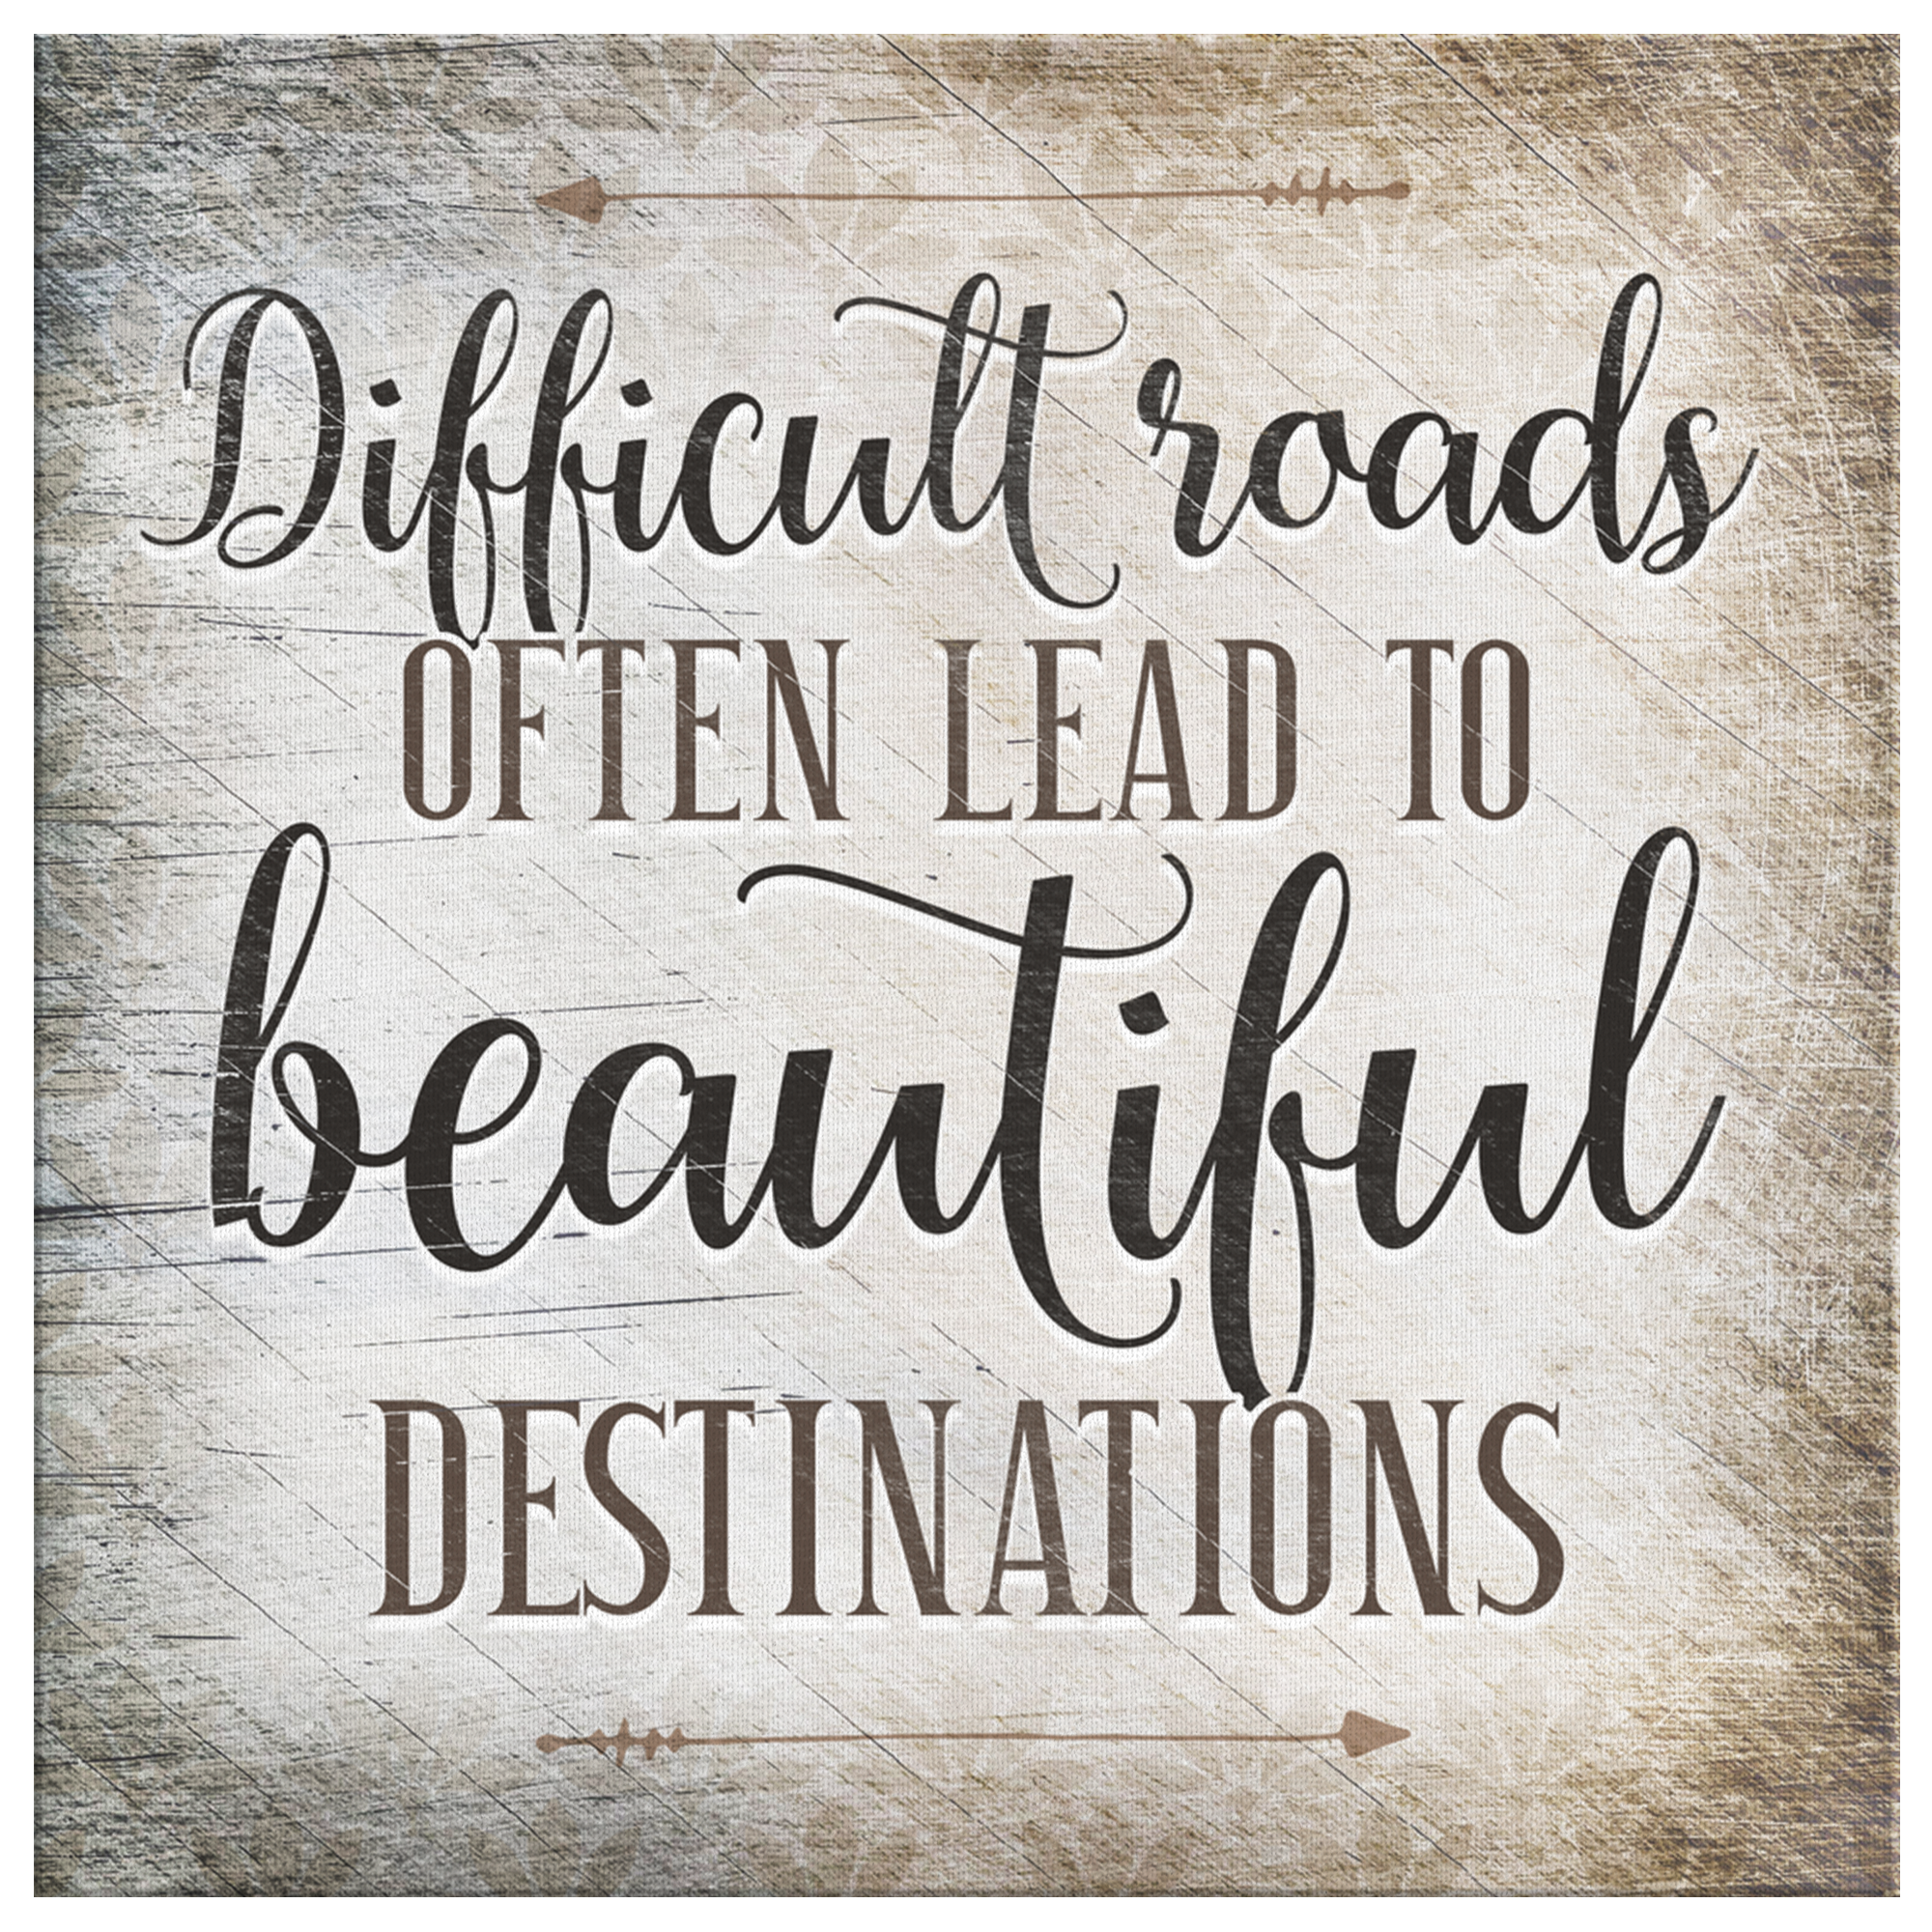 "Difficult Roads Lead To Beautiful Destinations" Premium Canvas Wall Art